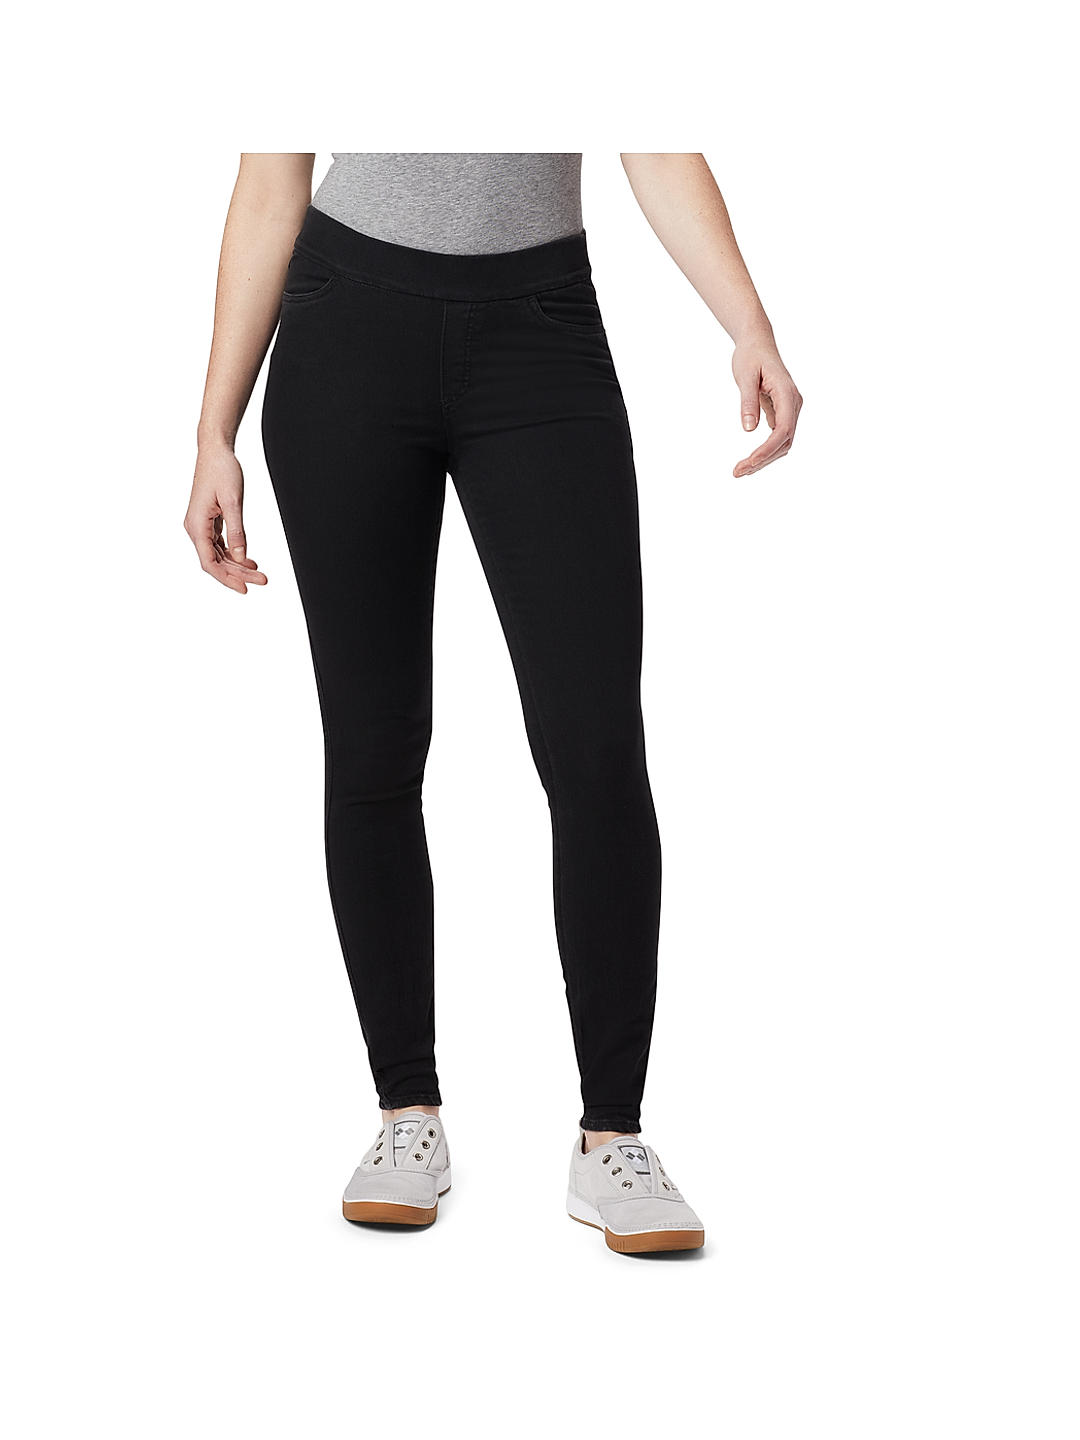 Buy Black Pinnacle Peak Twill Legging for Women Online at Columbia  Sportswear